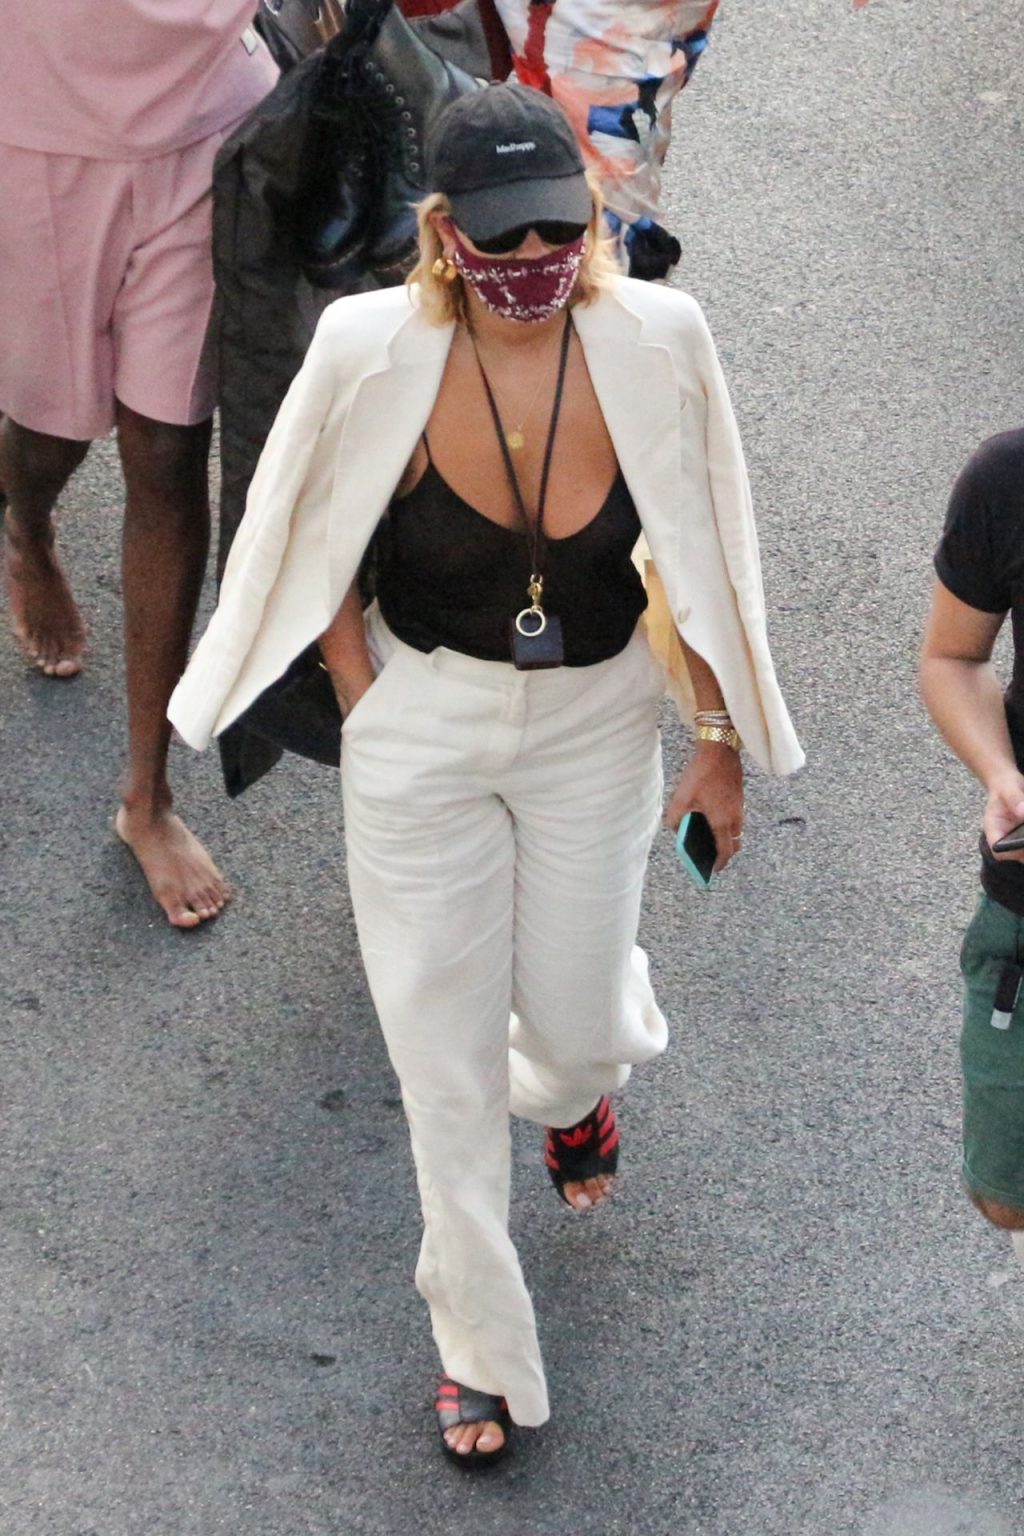 Rita Ora is Pictured Braless in Capri (26 Slightly Nude Photos)